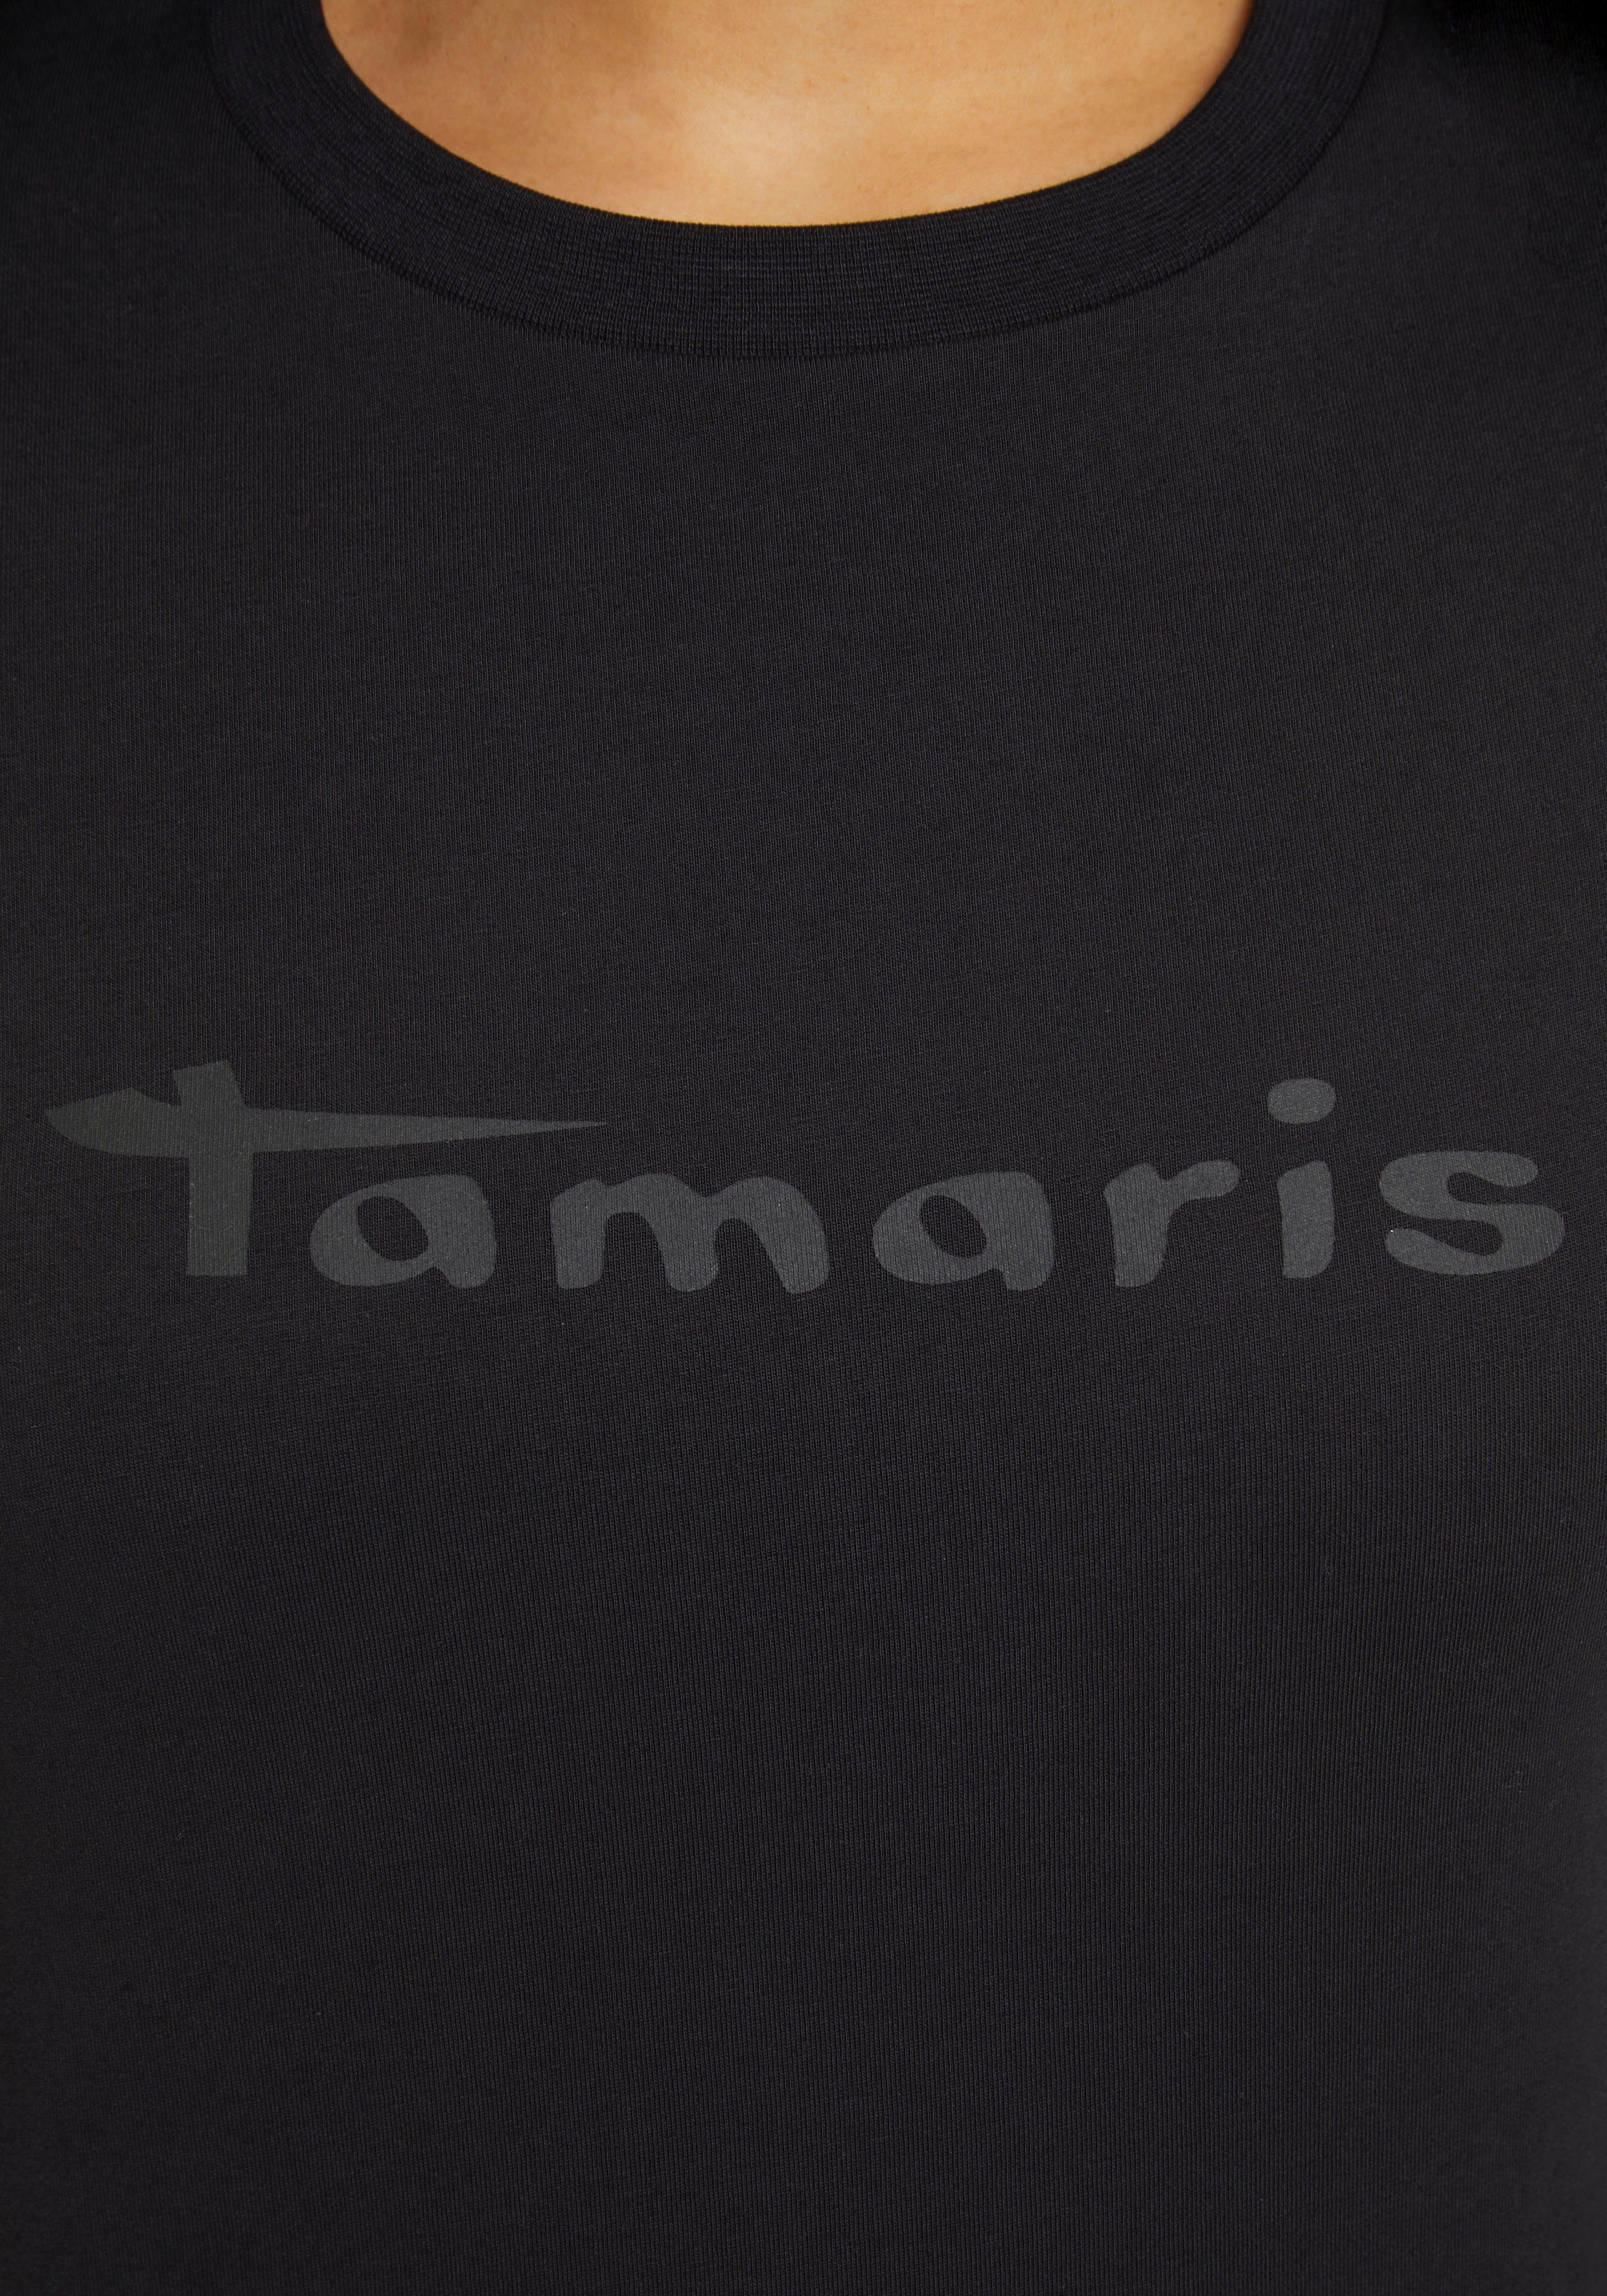 beauty black KOLLEKTION Tamaris Rundhalsausschnitt mit NEUE T-Shirt -